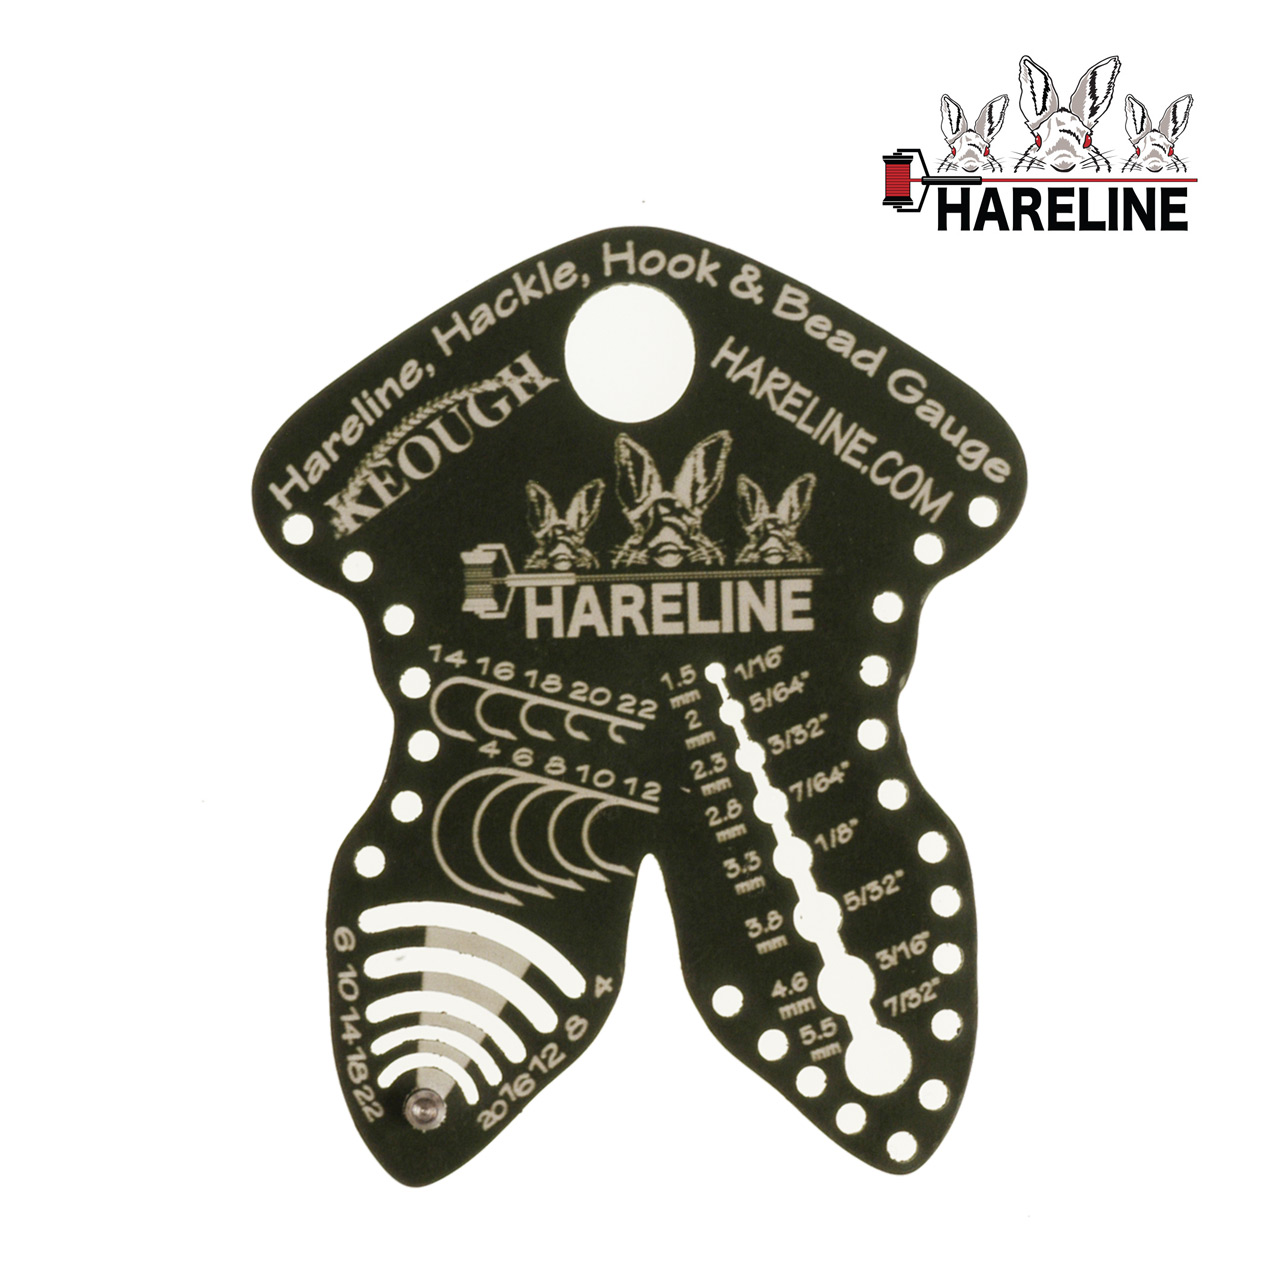 Hareline Hackle Hook & Bead Gauge – Fly Artist